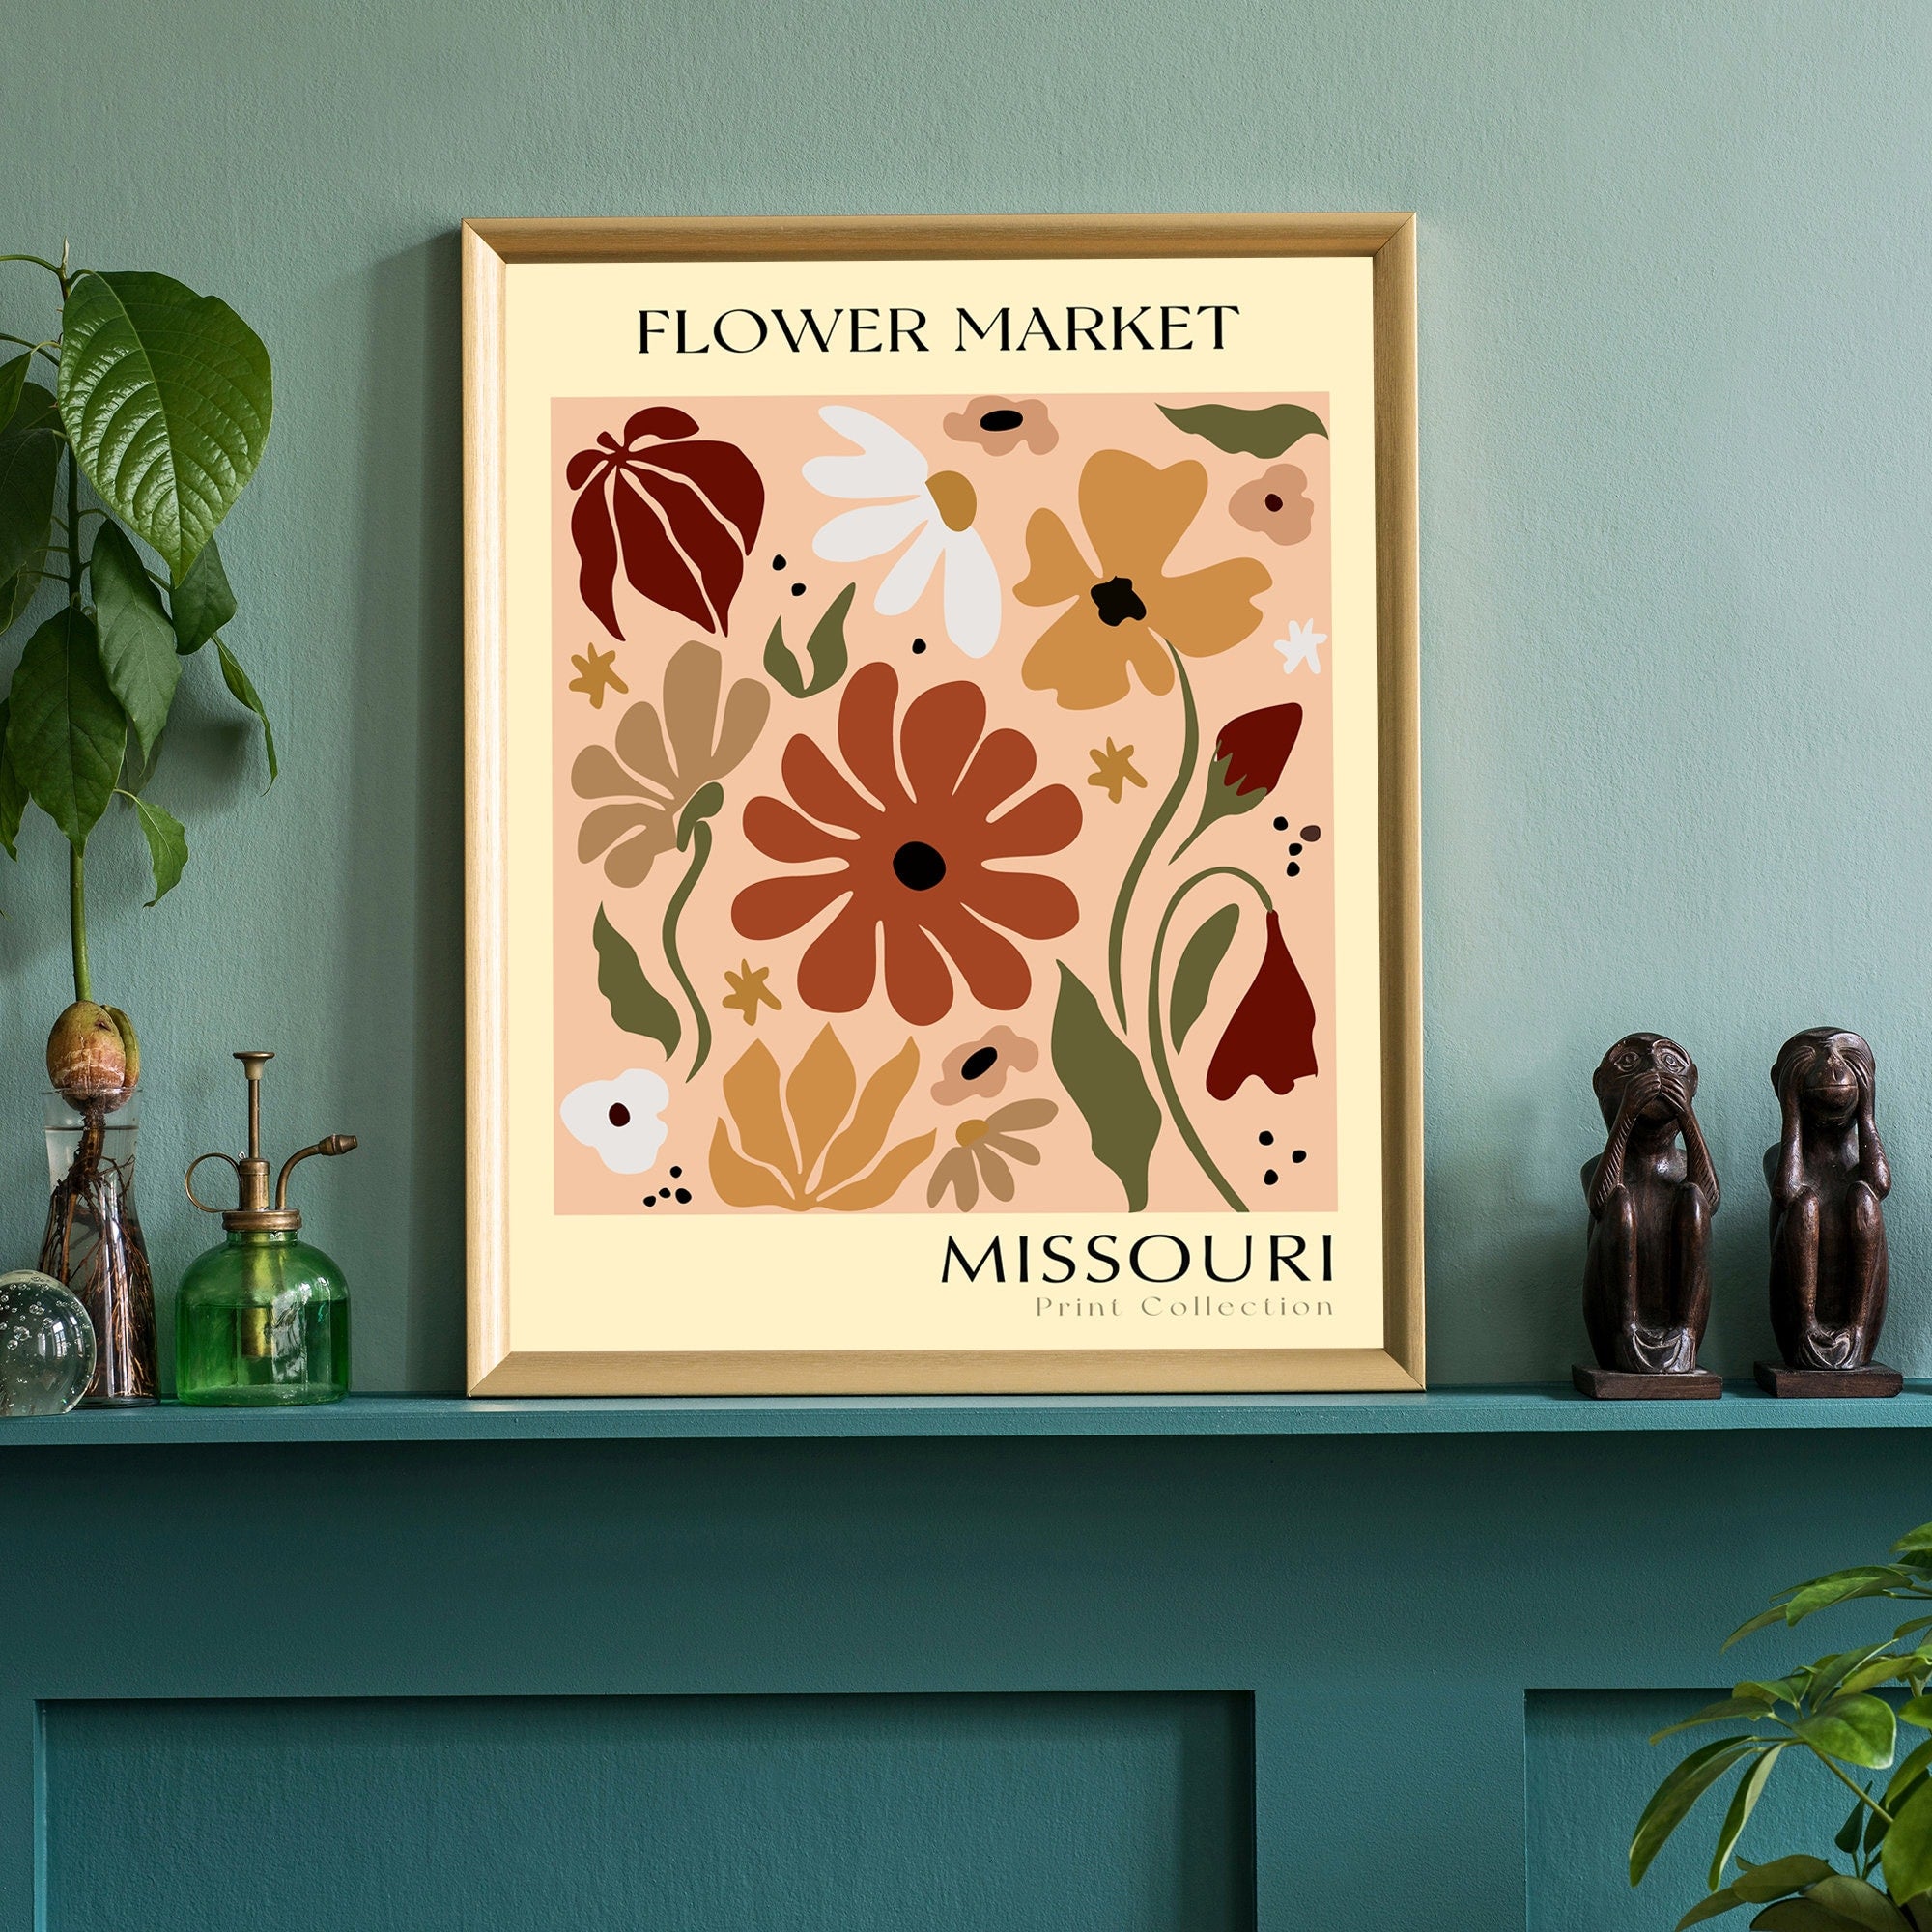 Missouri State flower print, USA states poster, Missouri flower market poster, Botanical poster, Nature poster artwork, Boho floral wall art